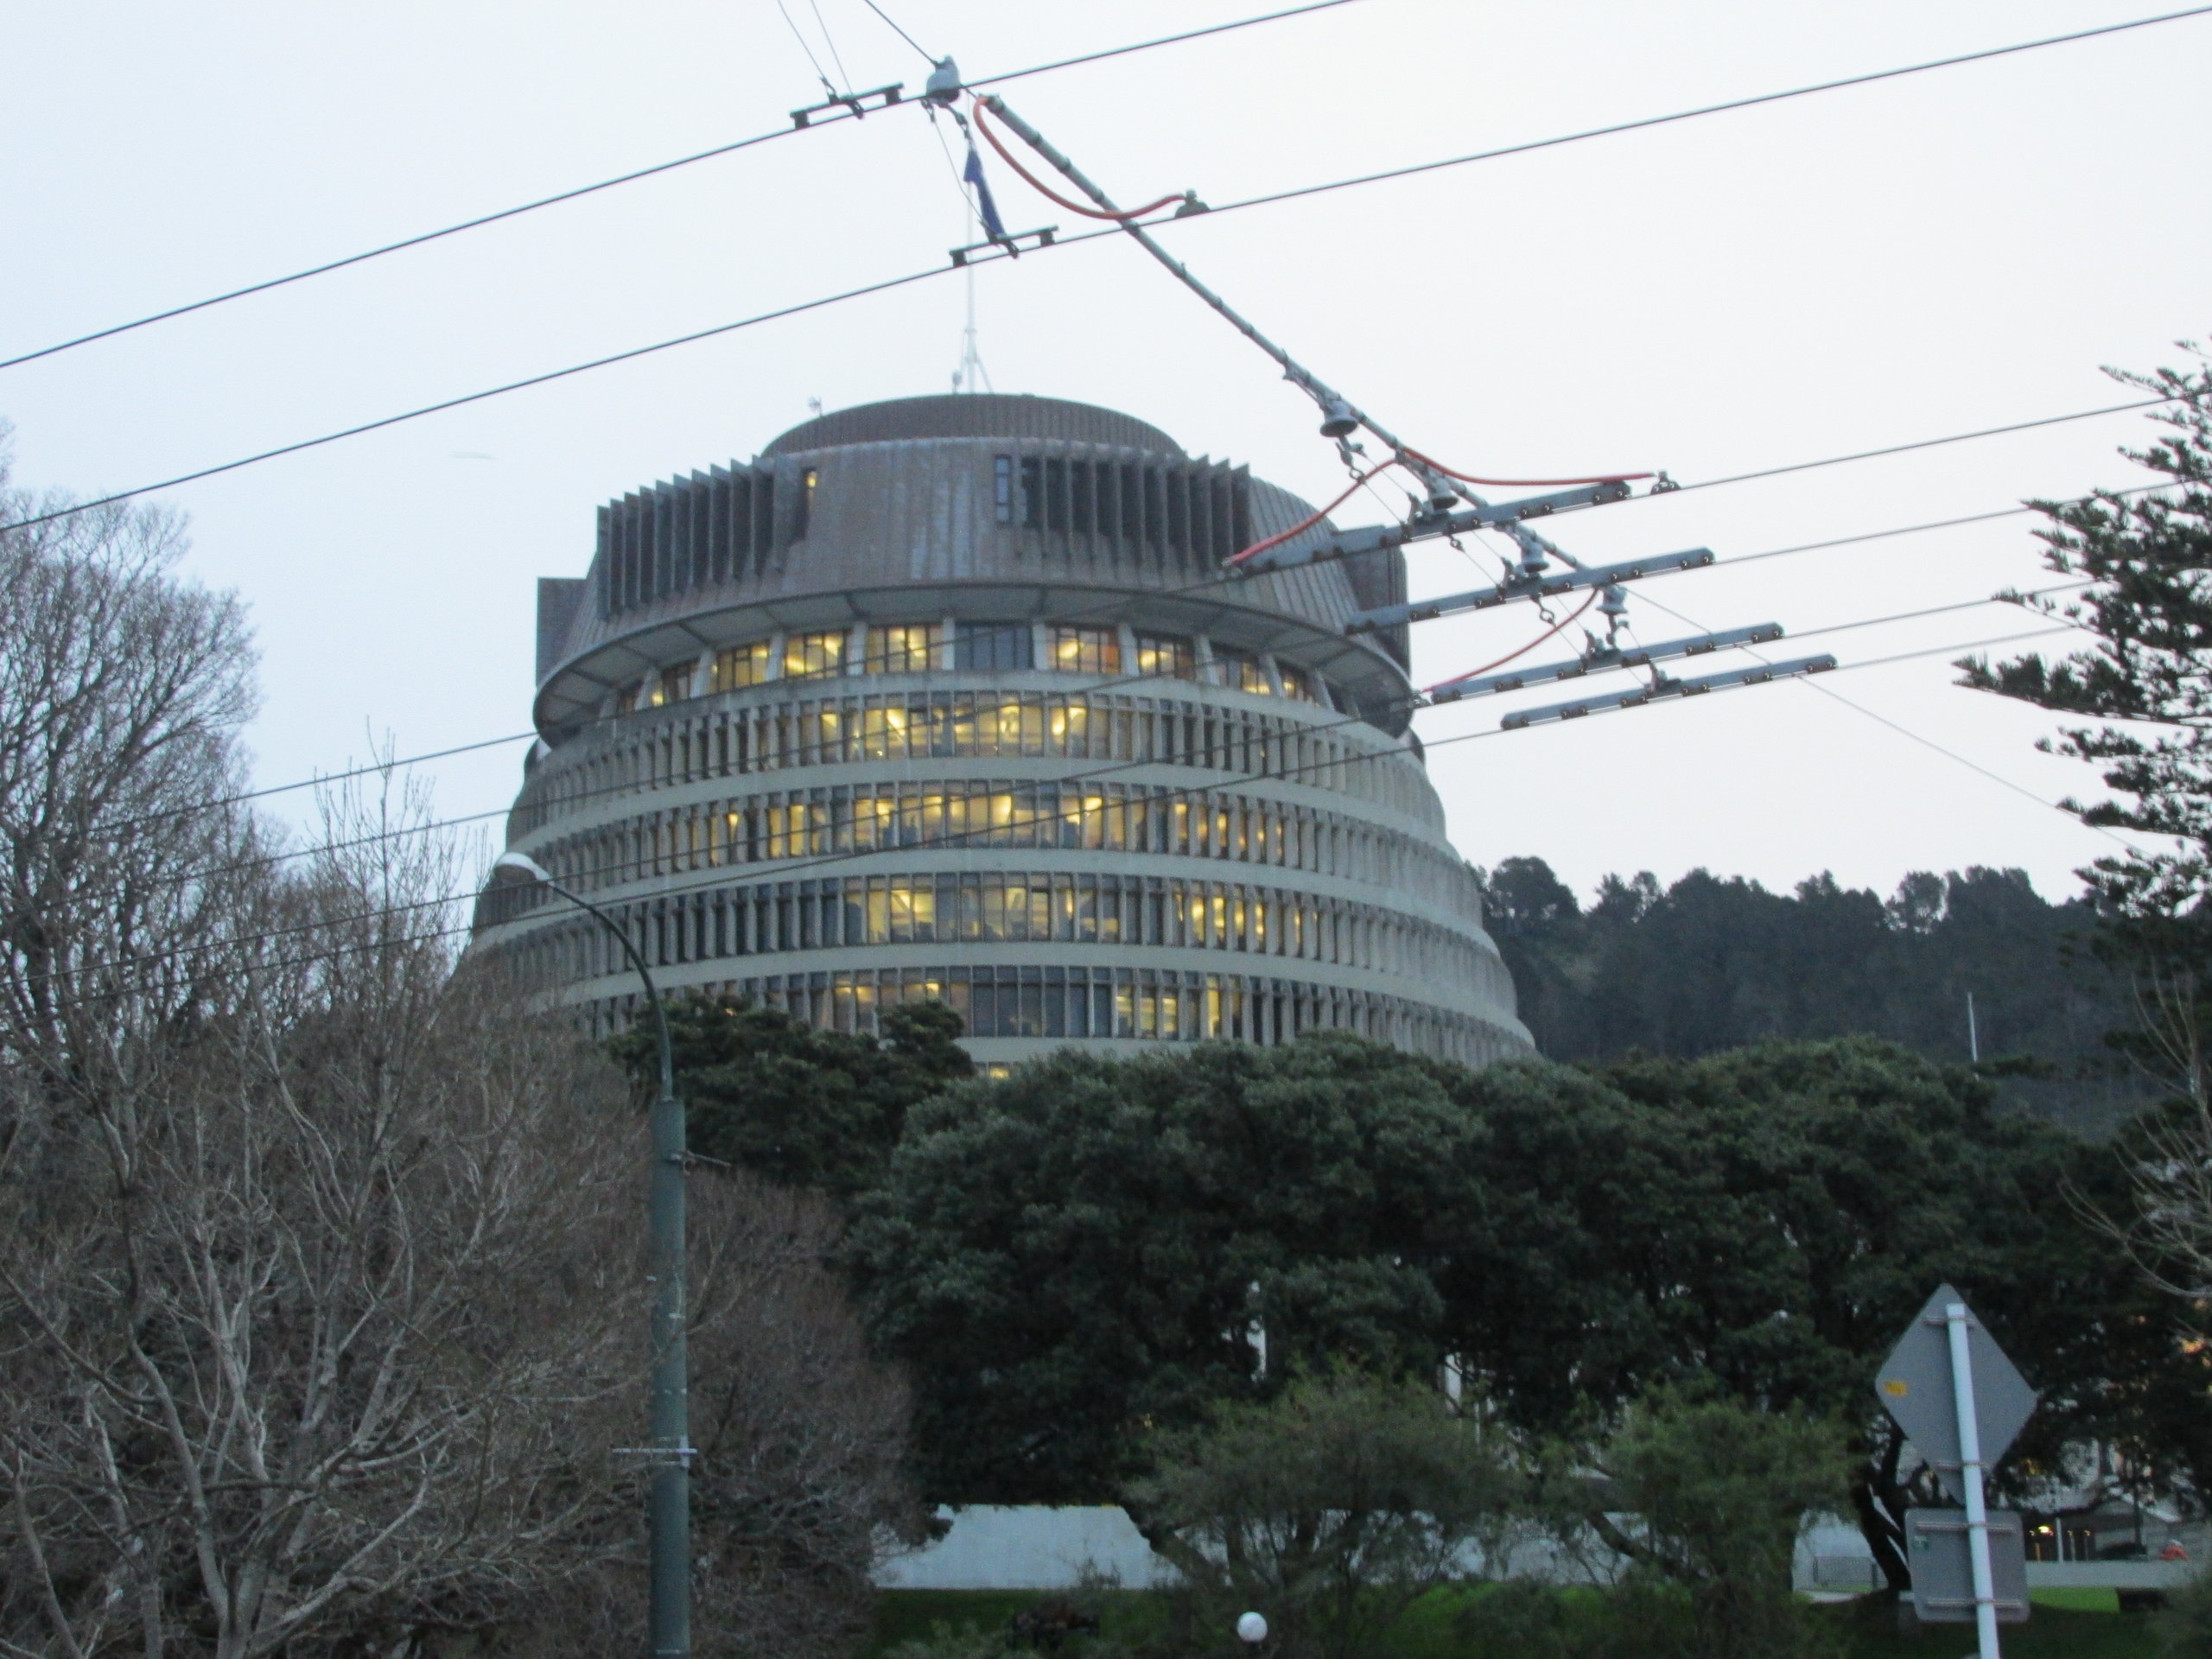 NZ Parliament building (aka The Beehiive)